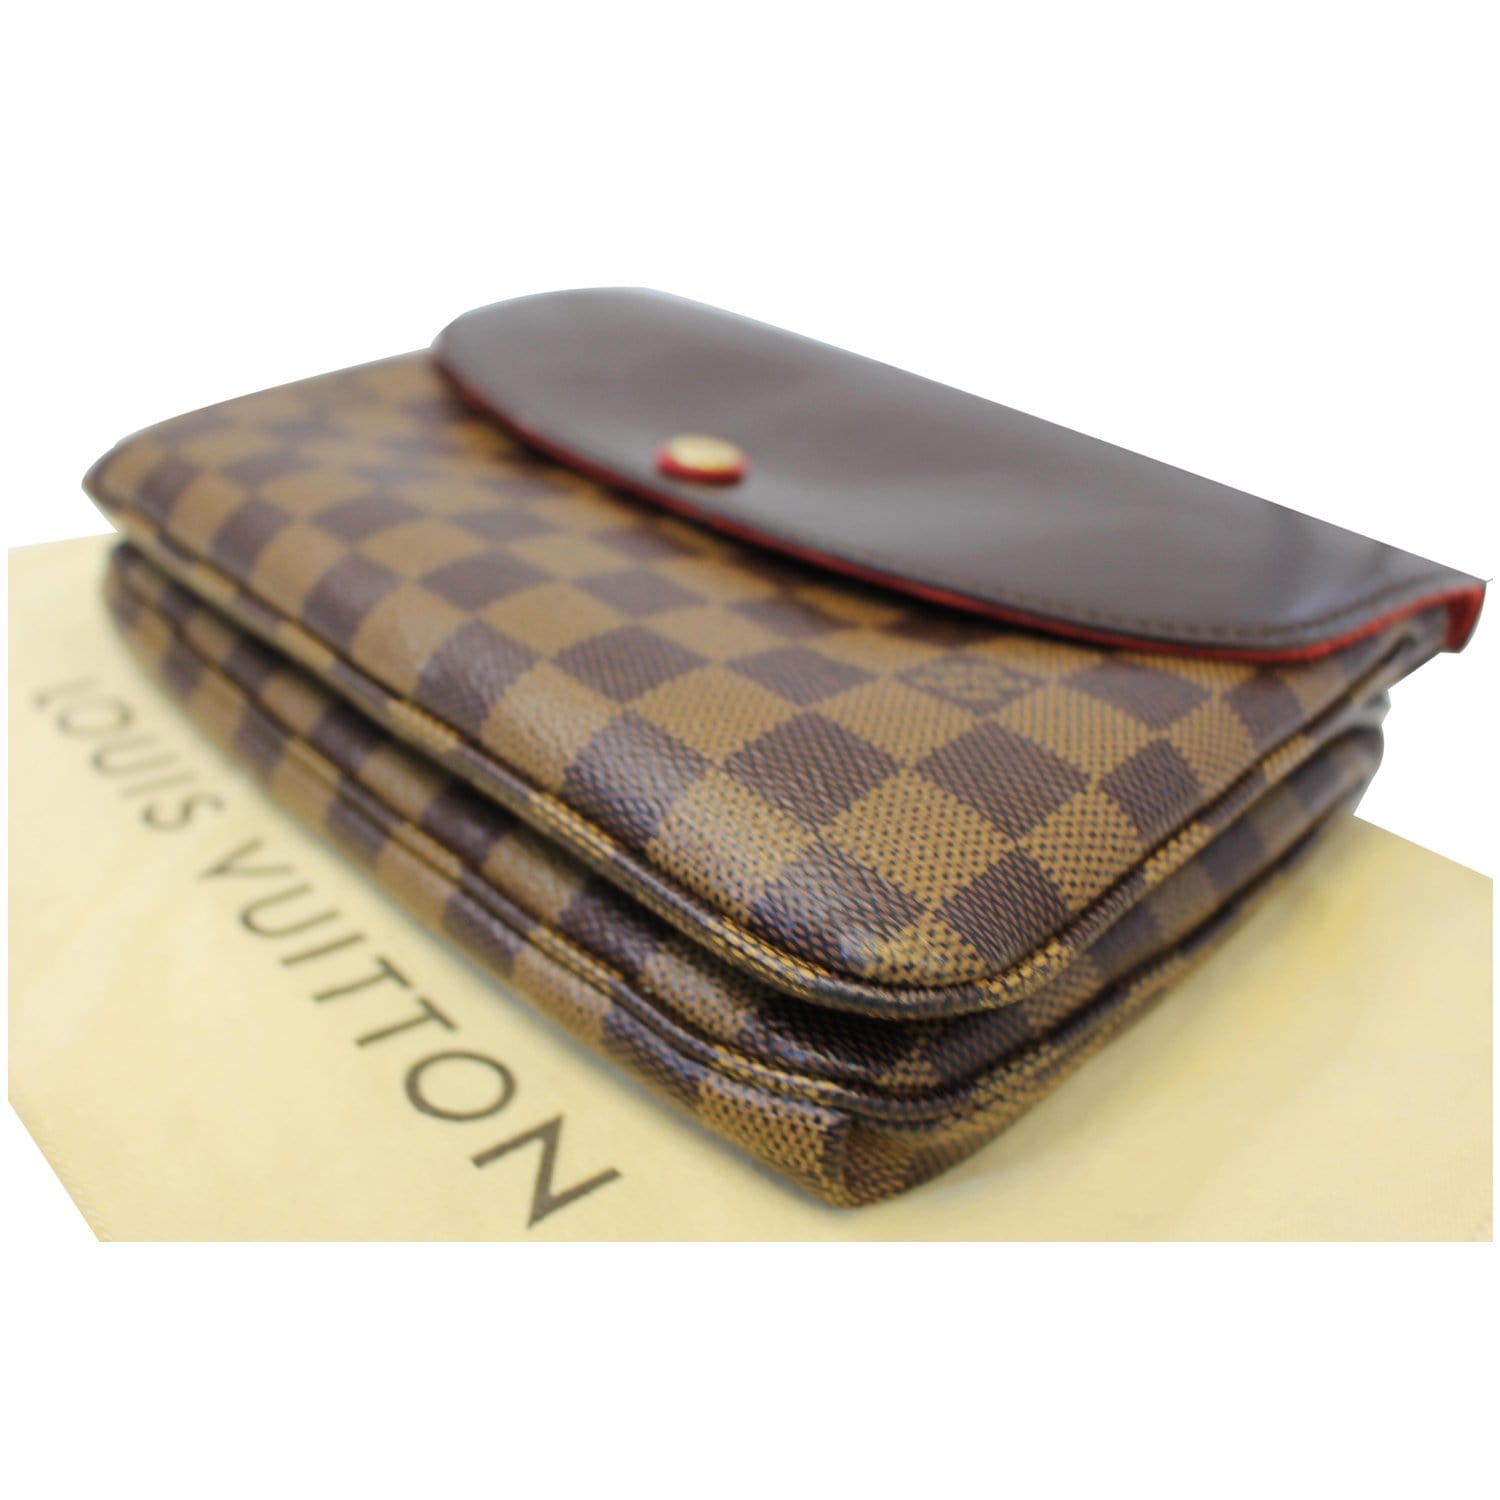 Louis Vuitton LOUIS VUITTON Damier Twice Shoulder Bag Ebene N48259